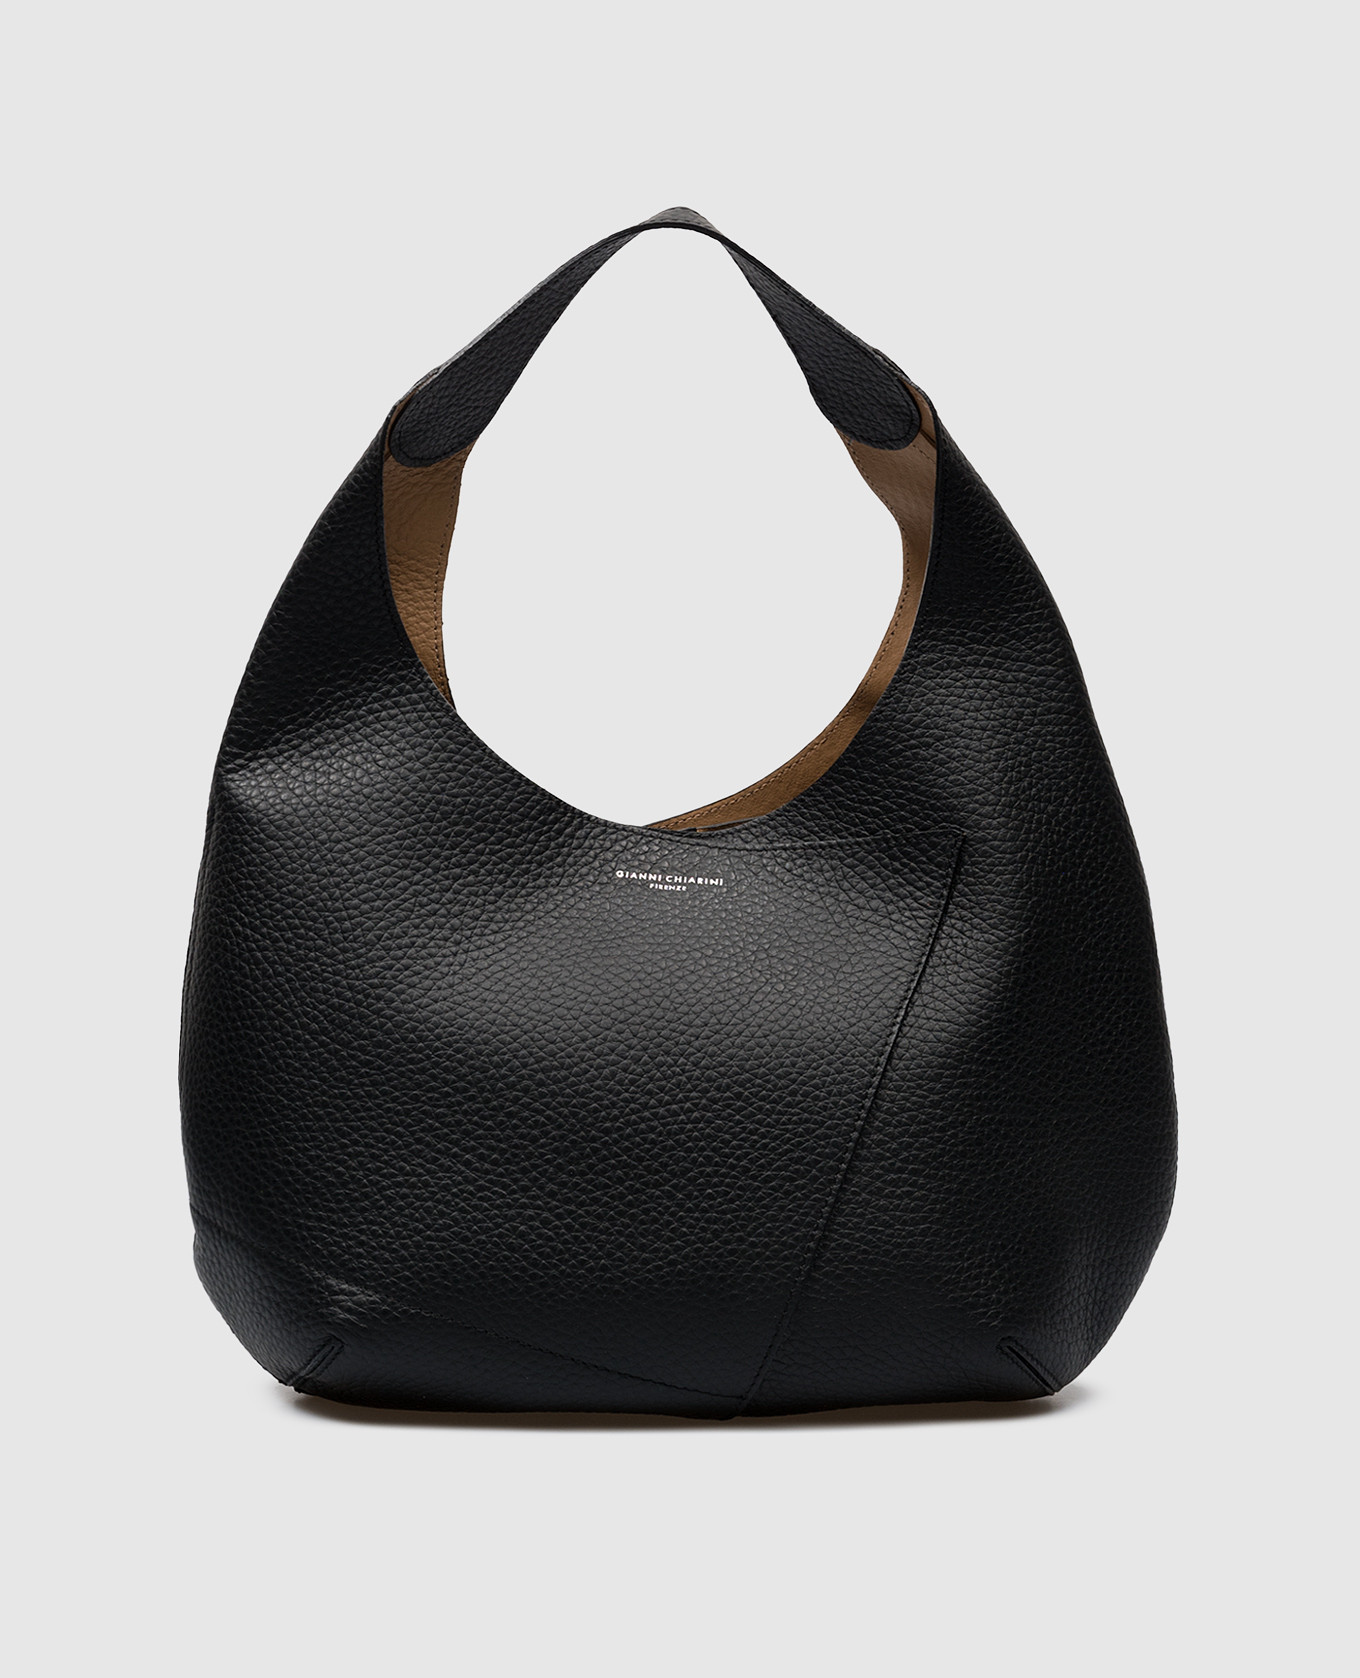 Euforia black leather bag with logo print